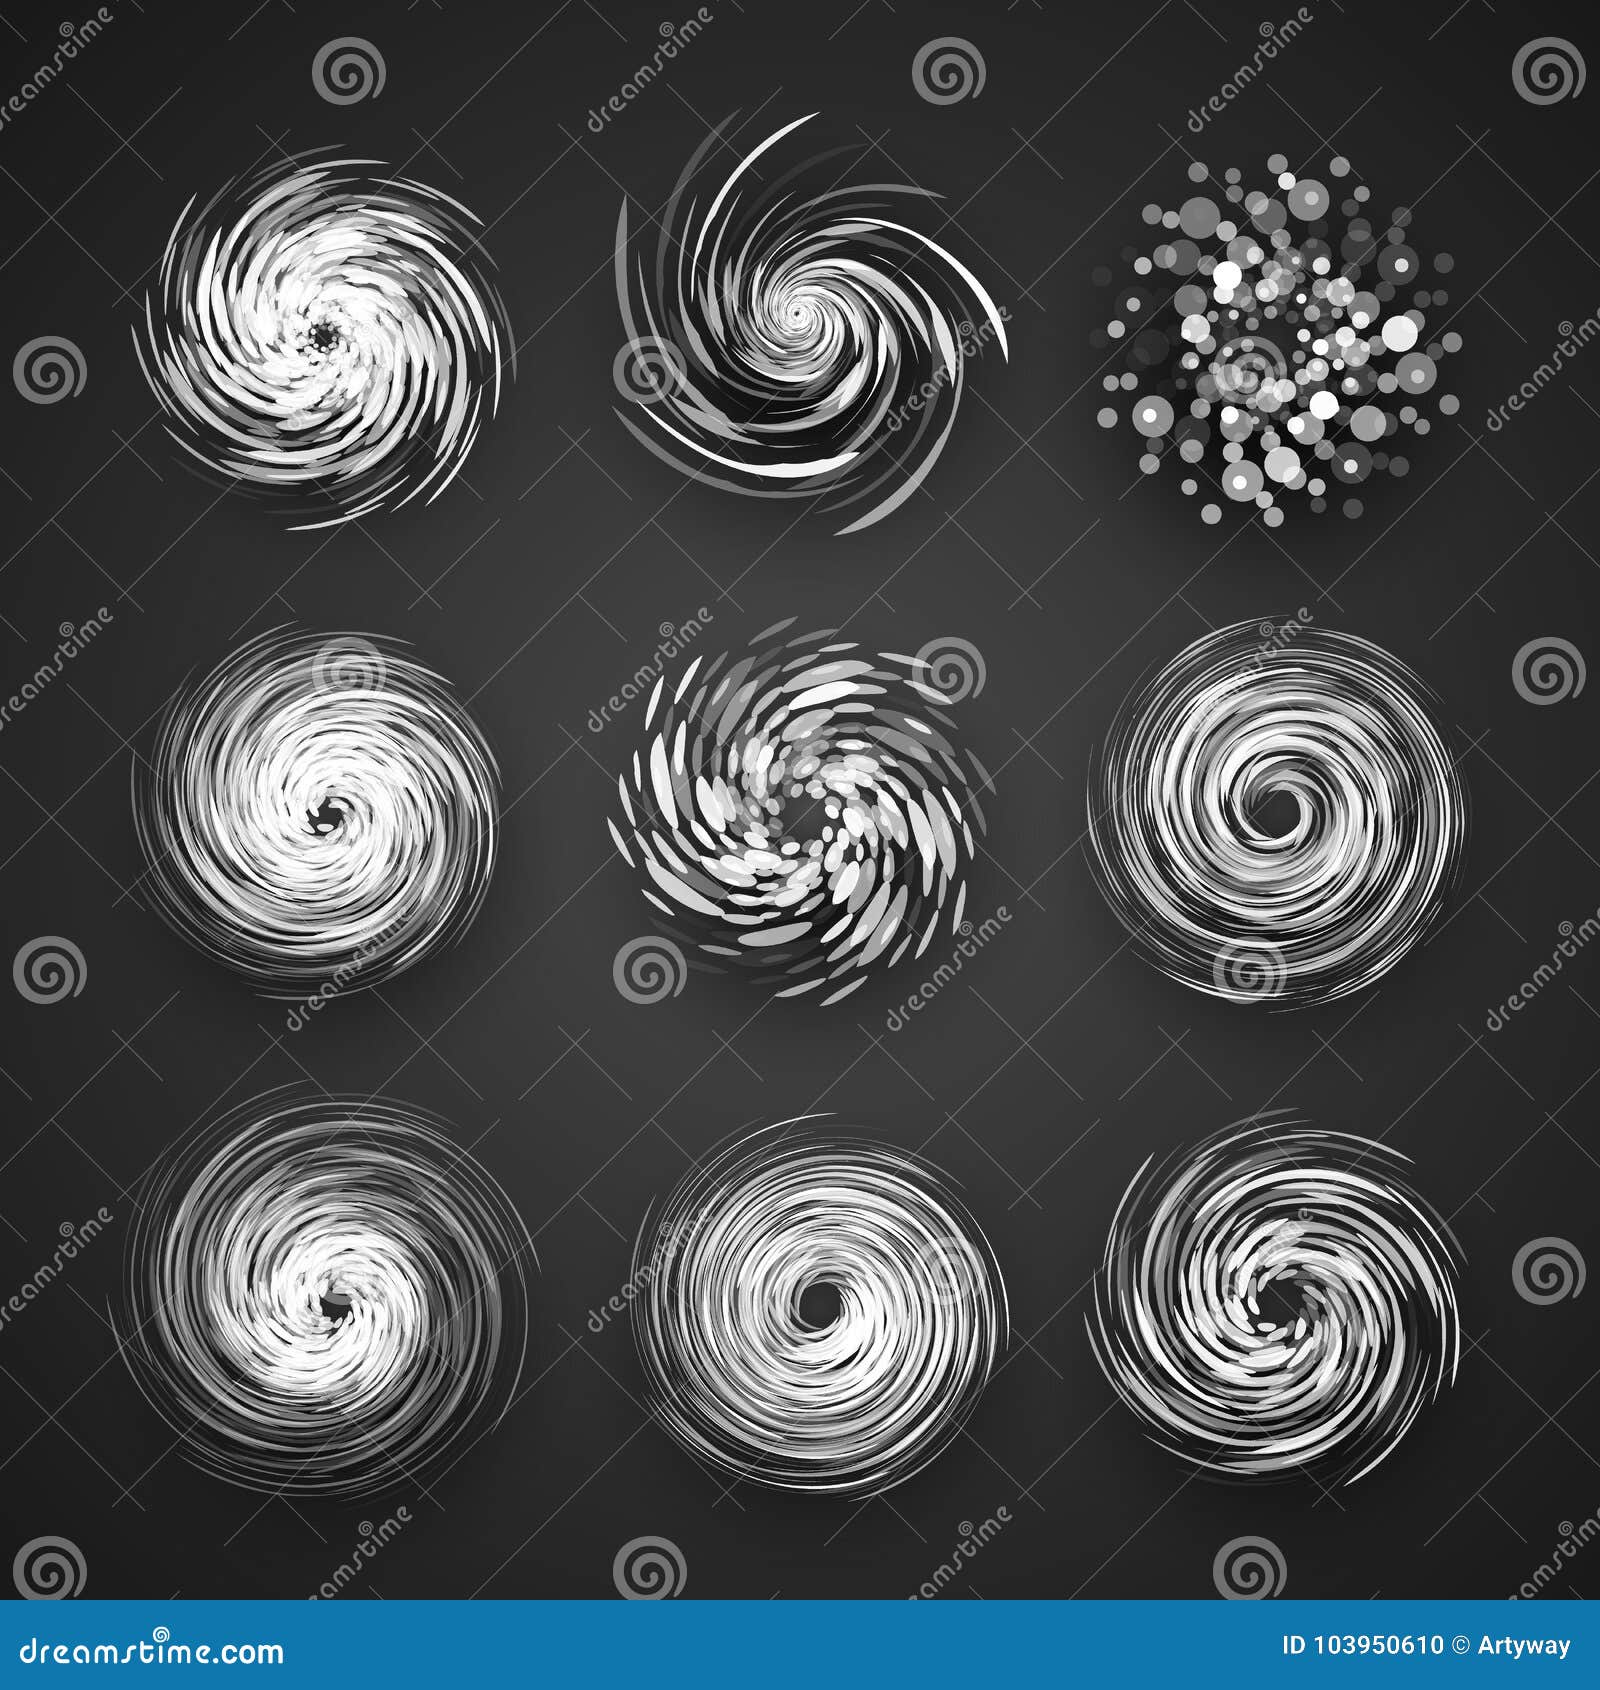 realistic hurricane cyclone  icon, typhoon spiral storm logo, spin vortex  on black background